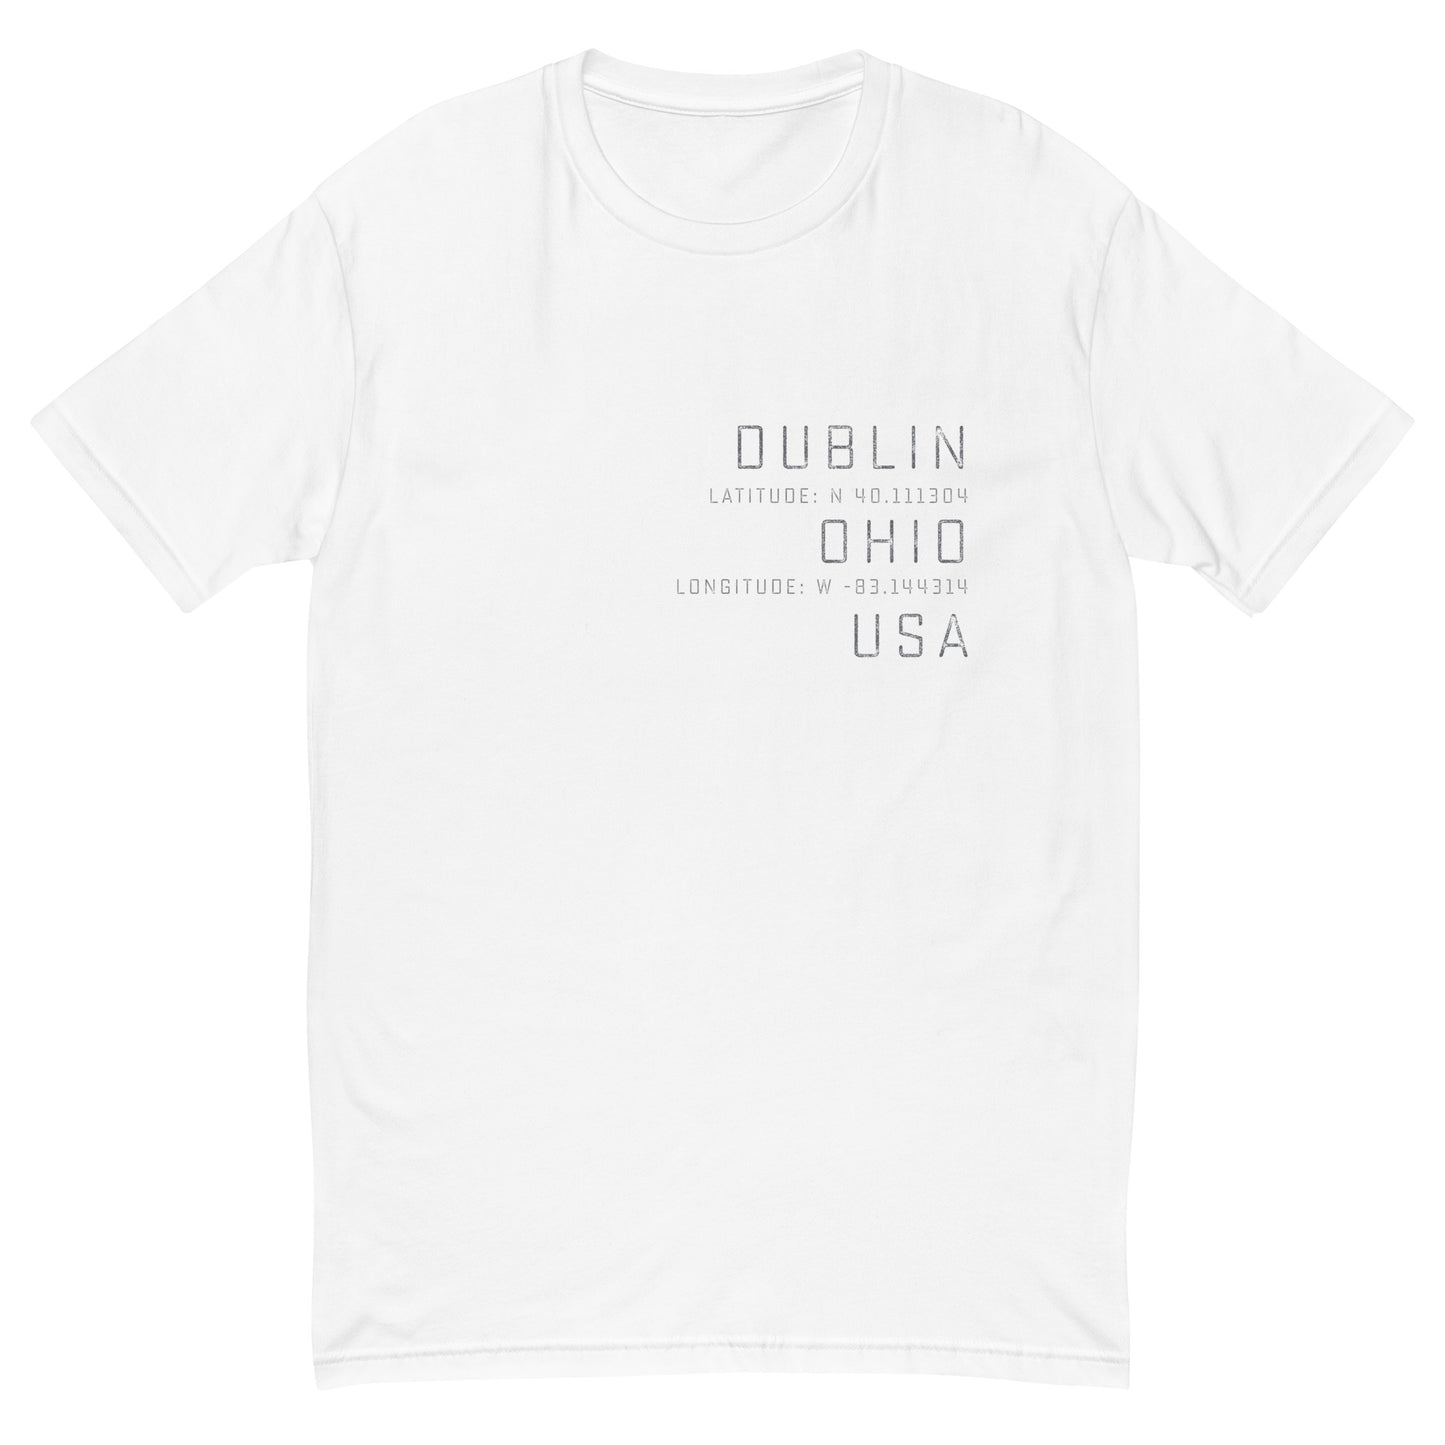 DUBLIN OH USA_Longitude-Latitude-Short Sleeve T-shirt